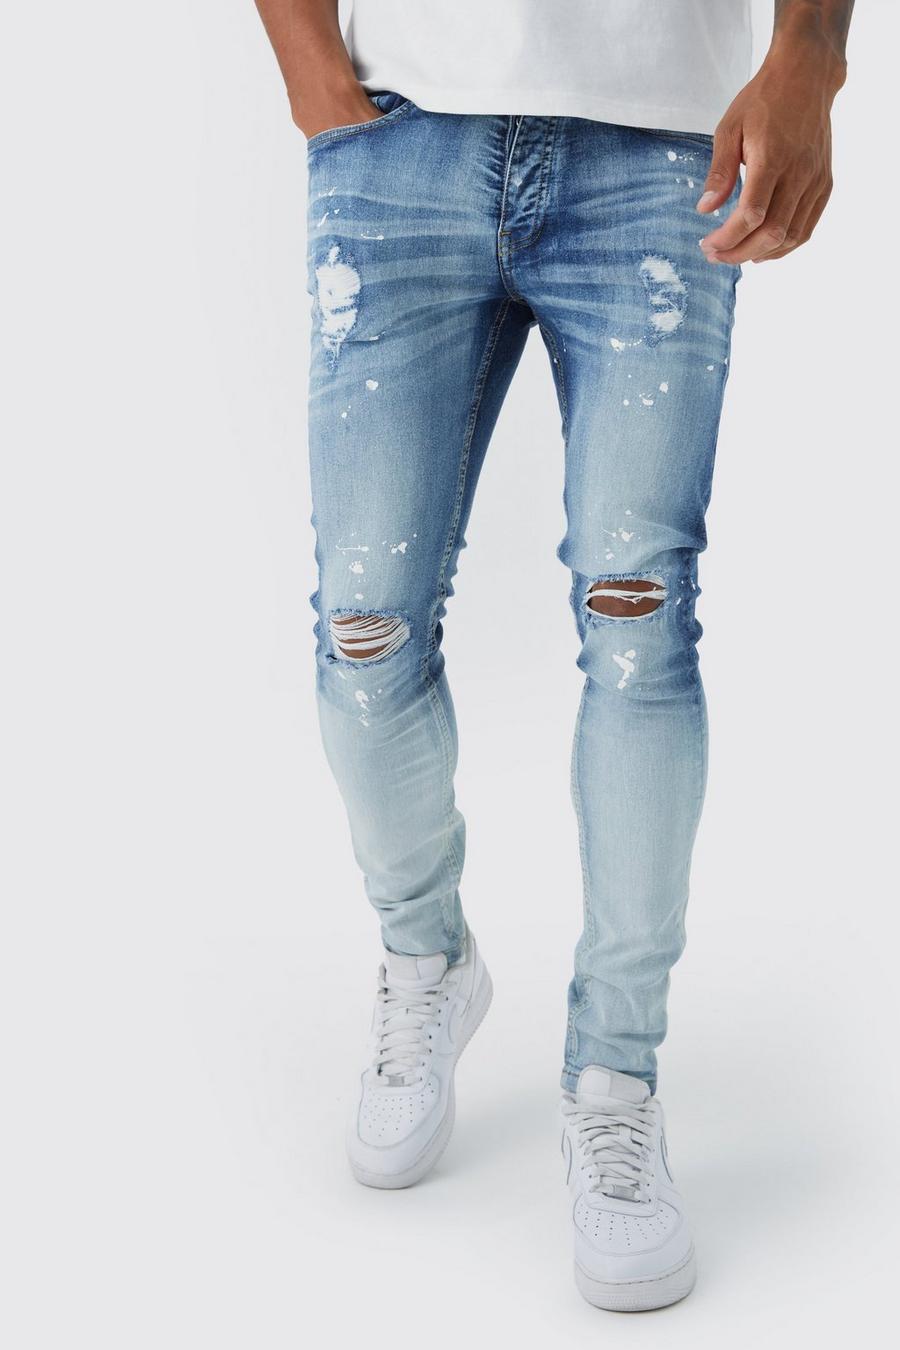 Jeans Tall Skinny Fit in Stretch sfumati con schizzi di colore, Light blue azzurro